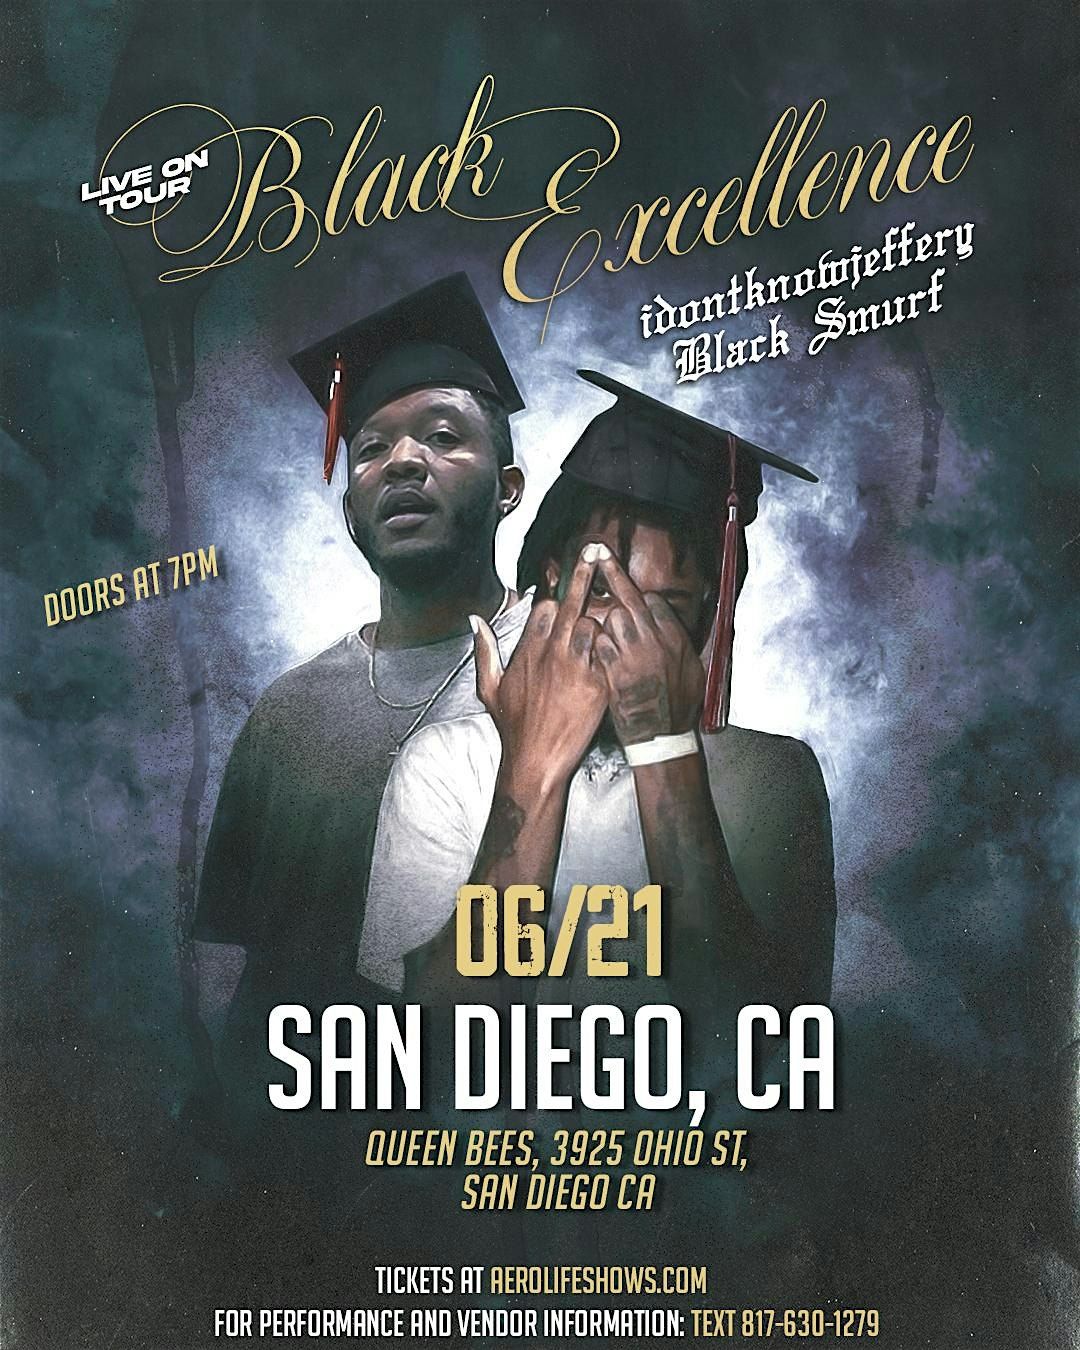 MAY 11th: IDONTKNOWJEFFERY & Black Smurf Live in Sacramento, CA